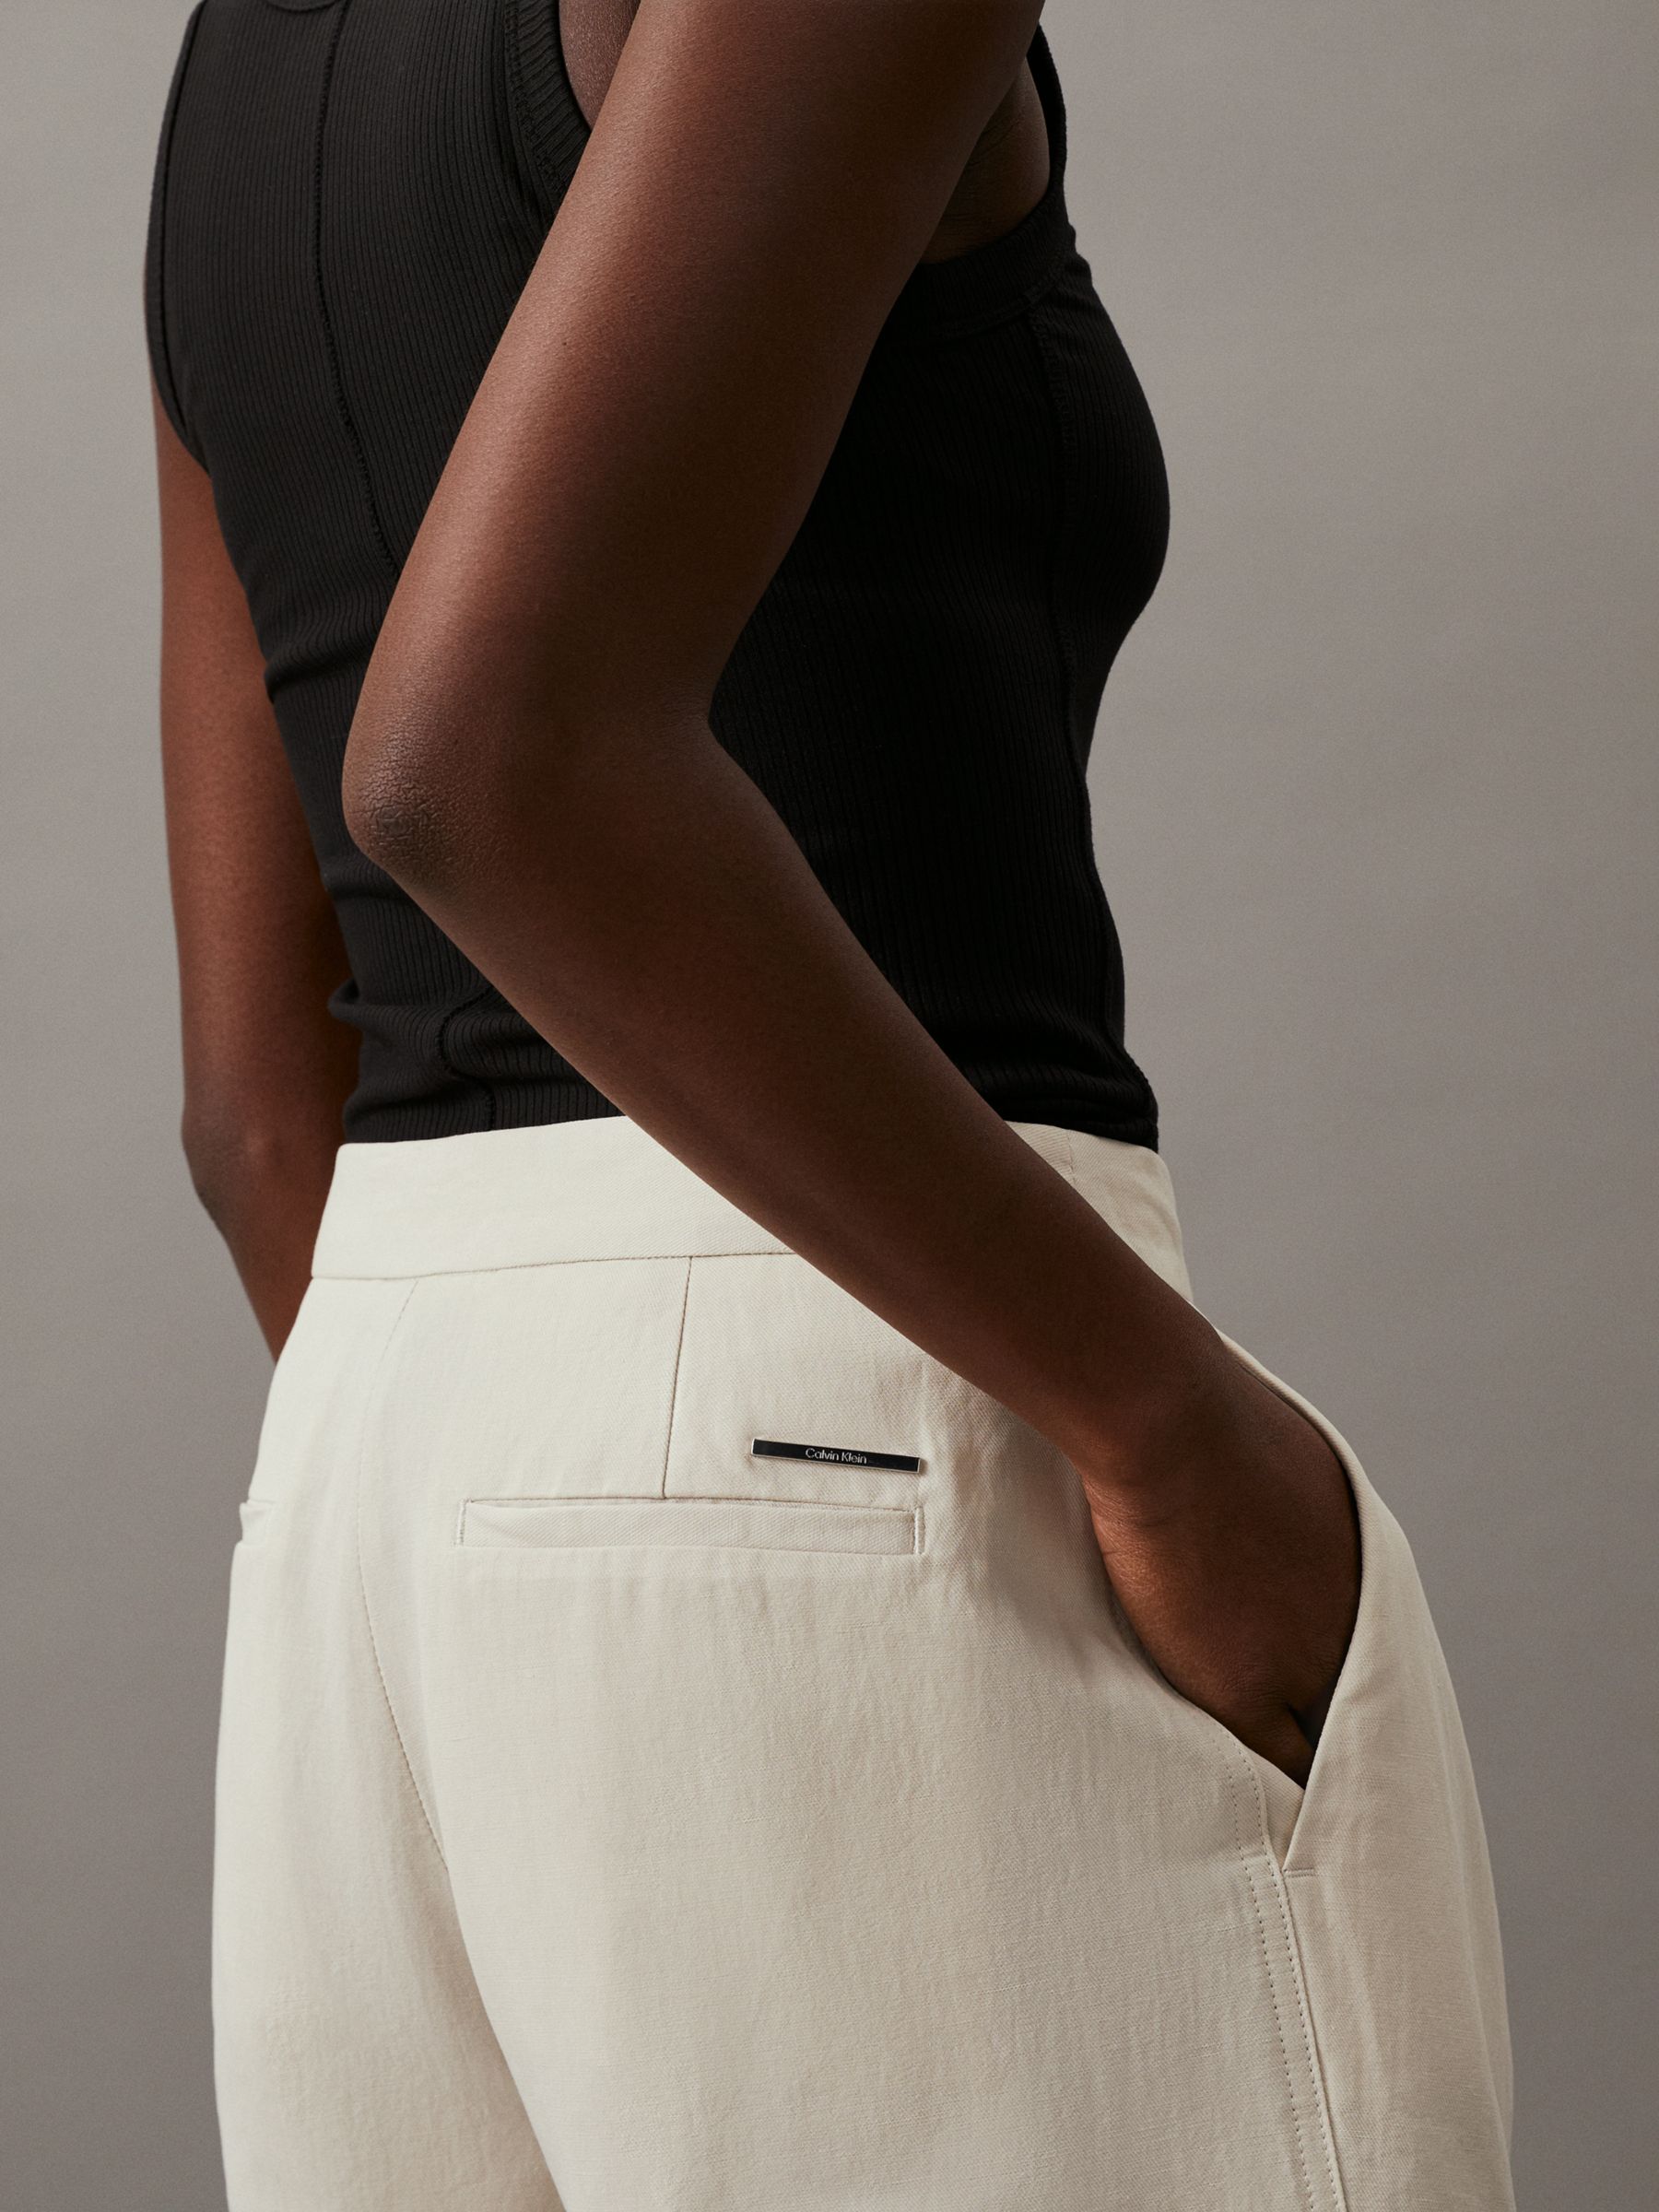 Buy Calvin Klein Linen Tailored Shorts, Peyote Online at johnlewis.com